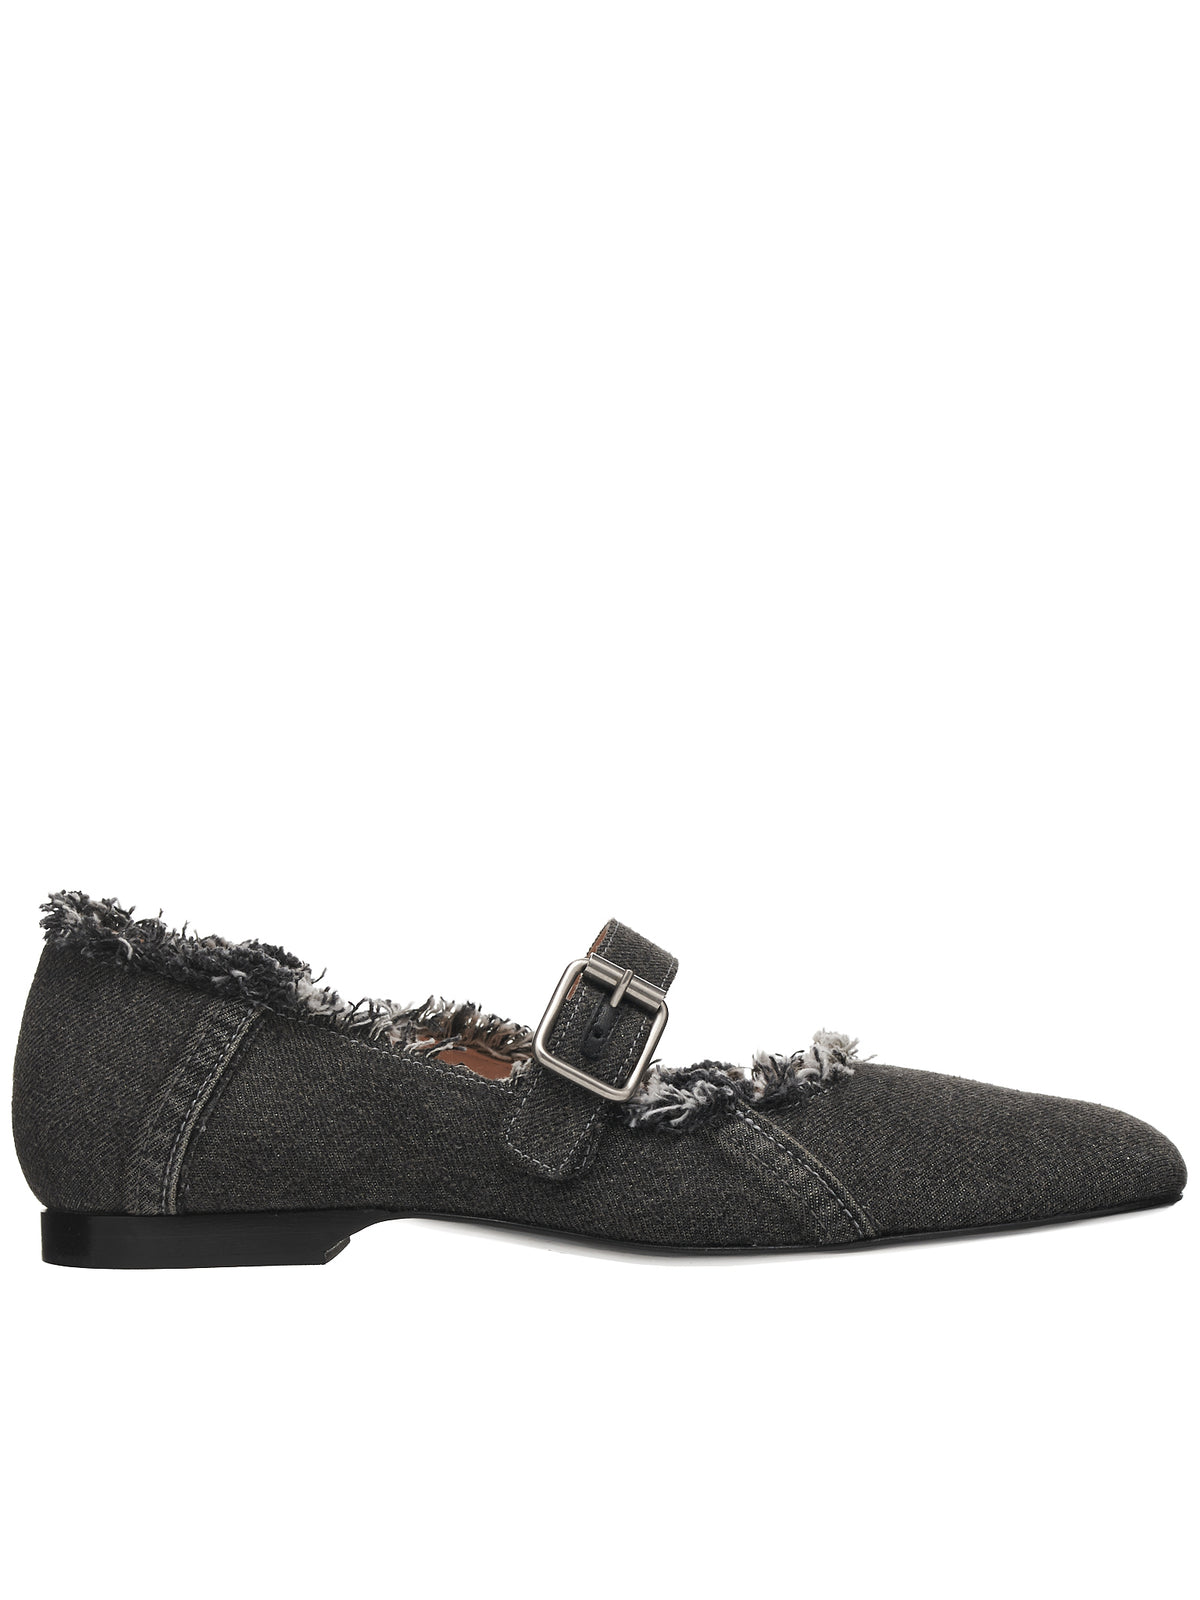 ACNE STUDIOS Denim Flat Shoes | H. Lorenzo - front